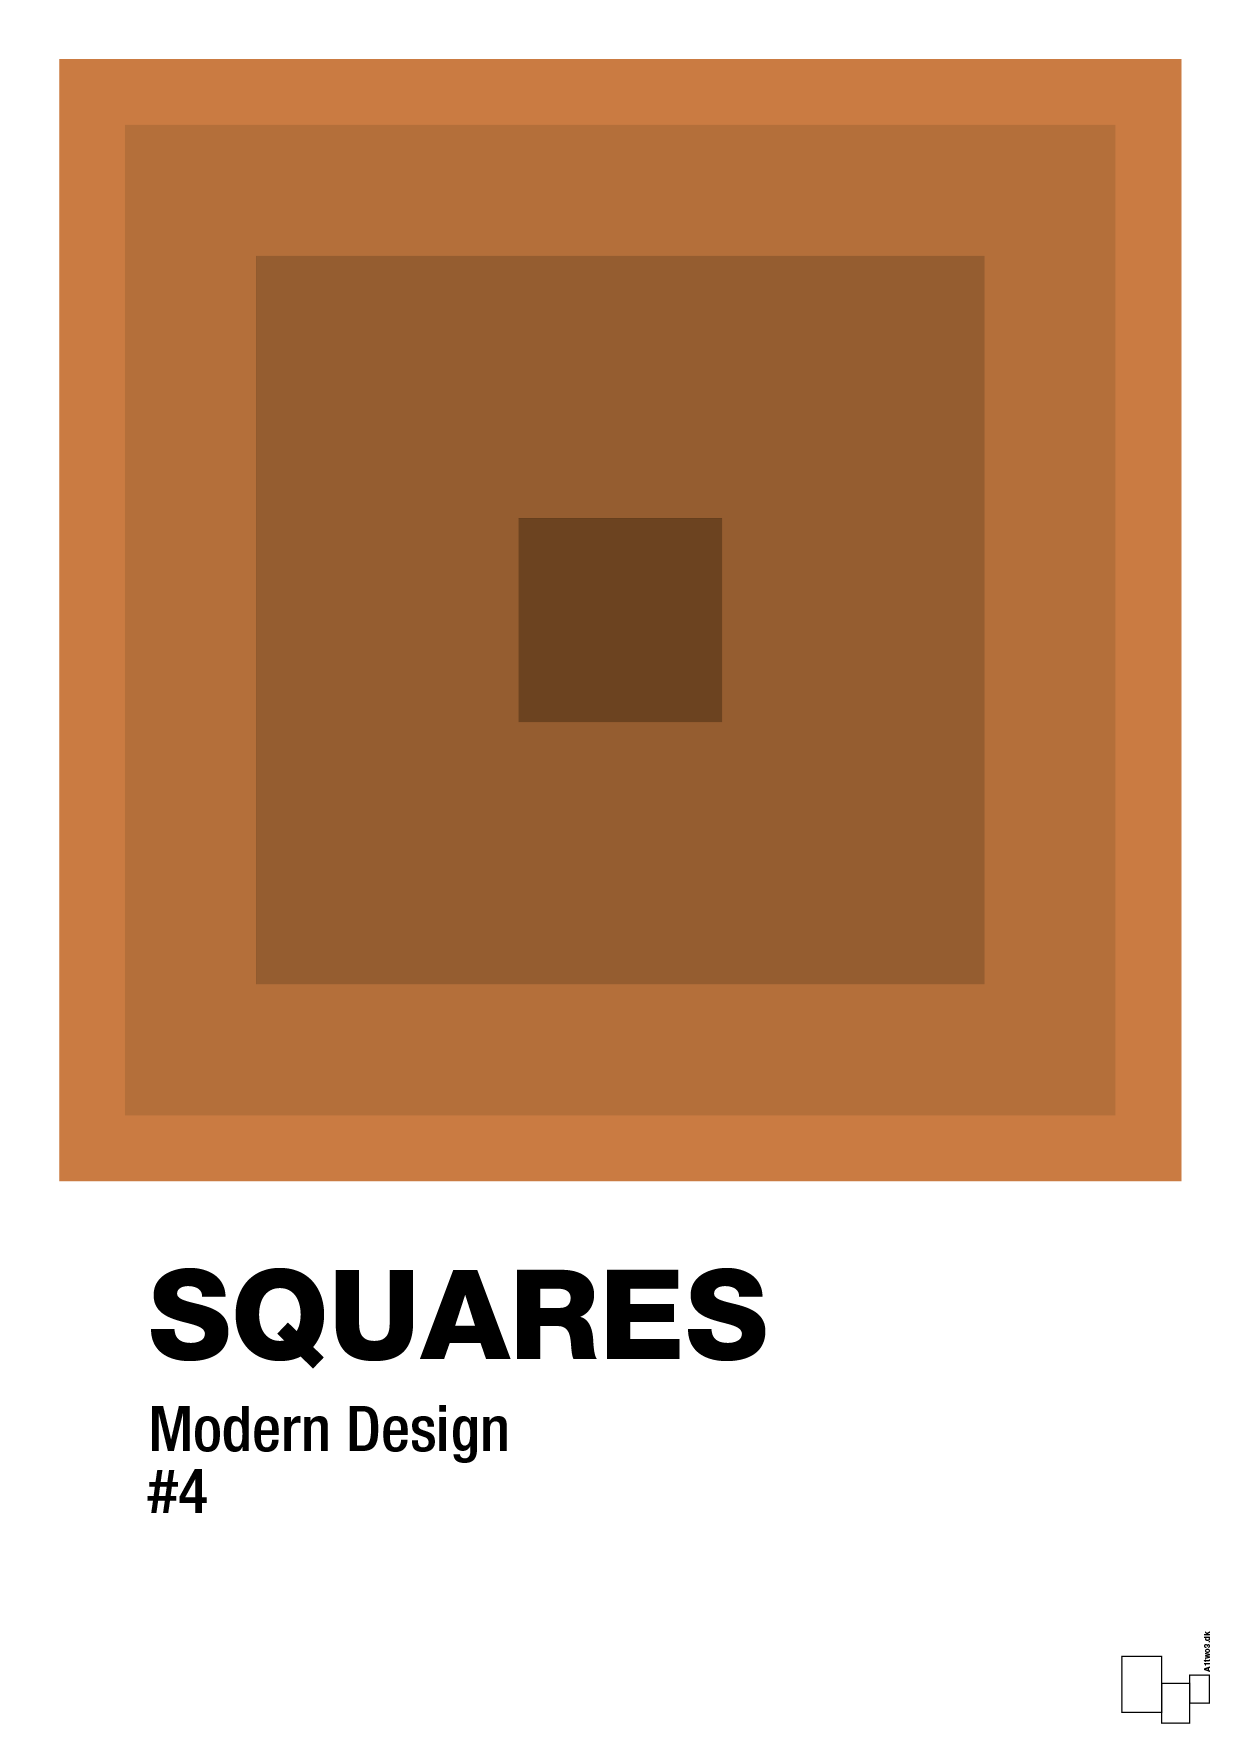 squares #4 - Plakat med Grafik i Rumba Orange